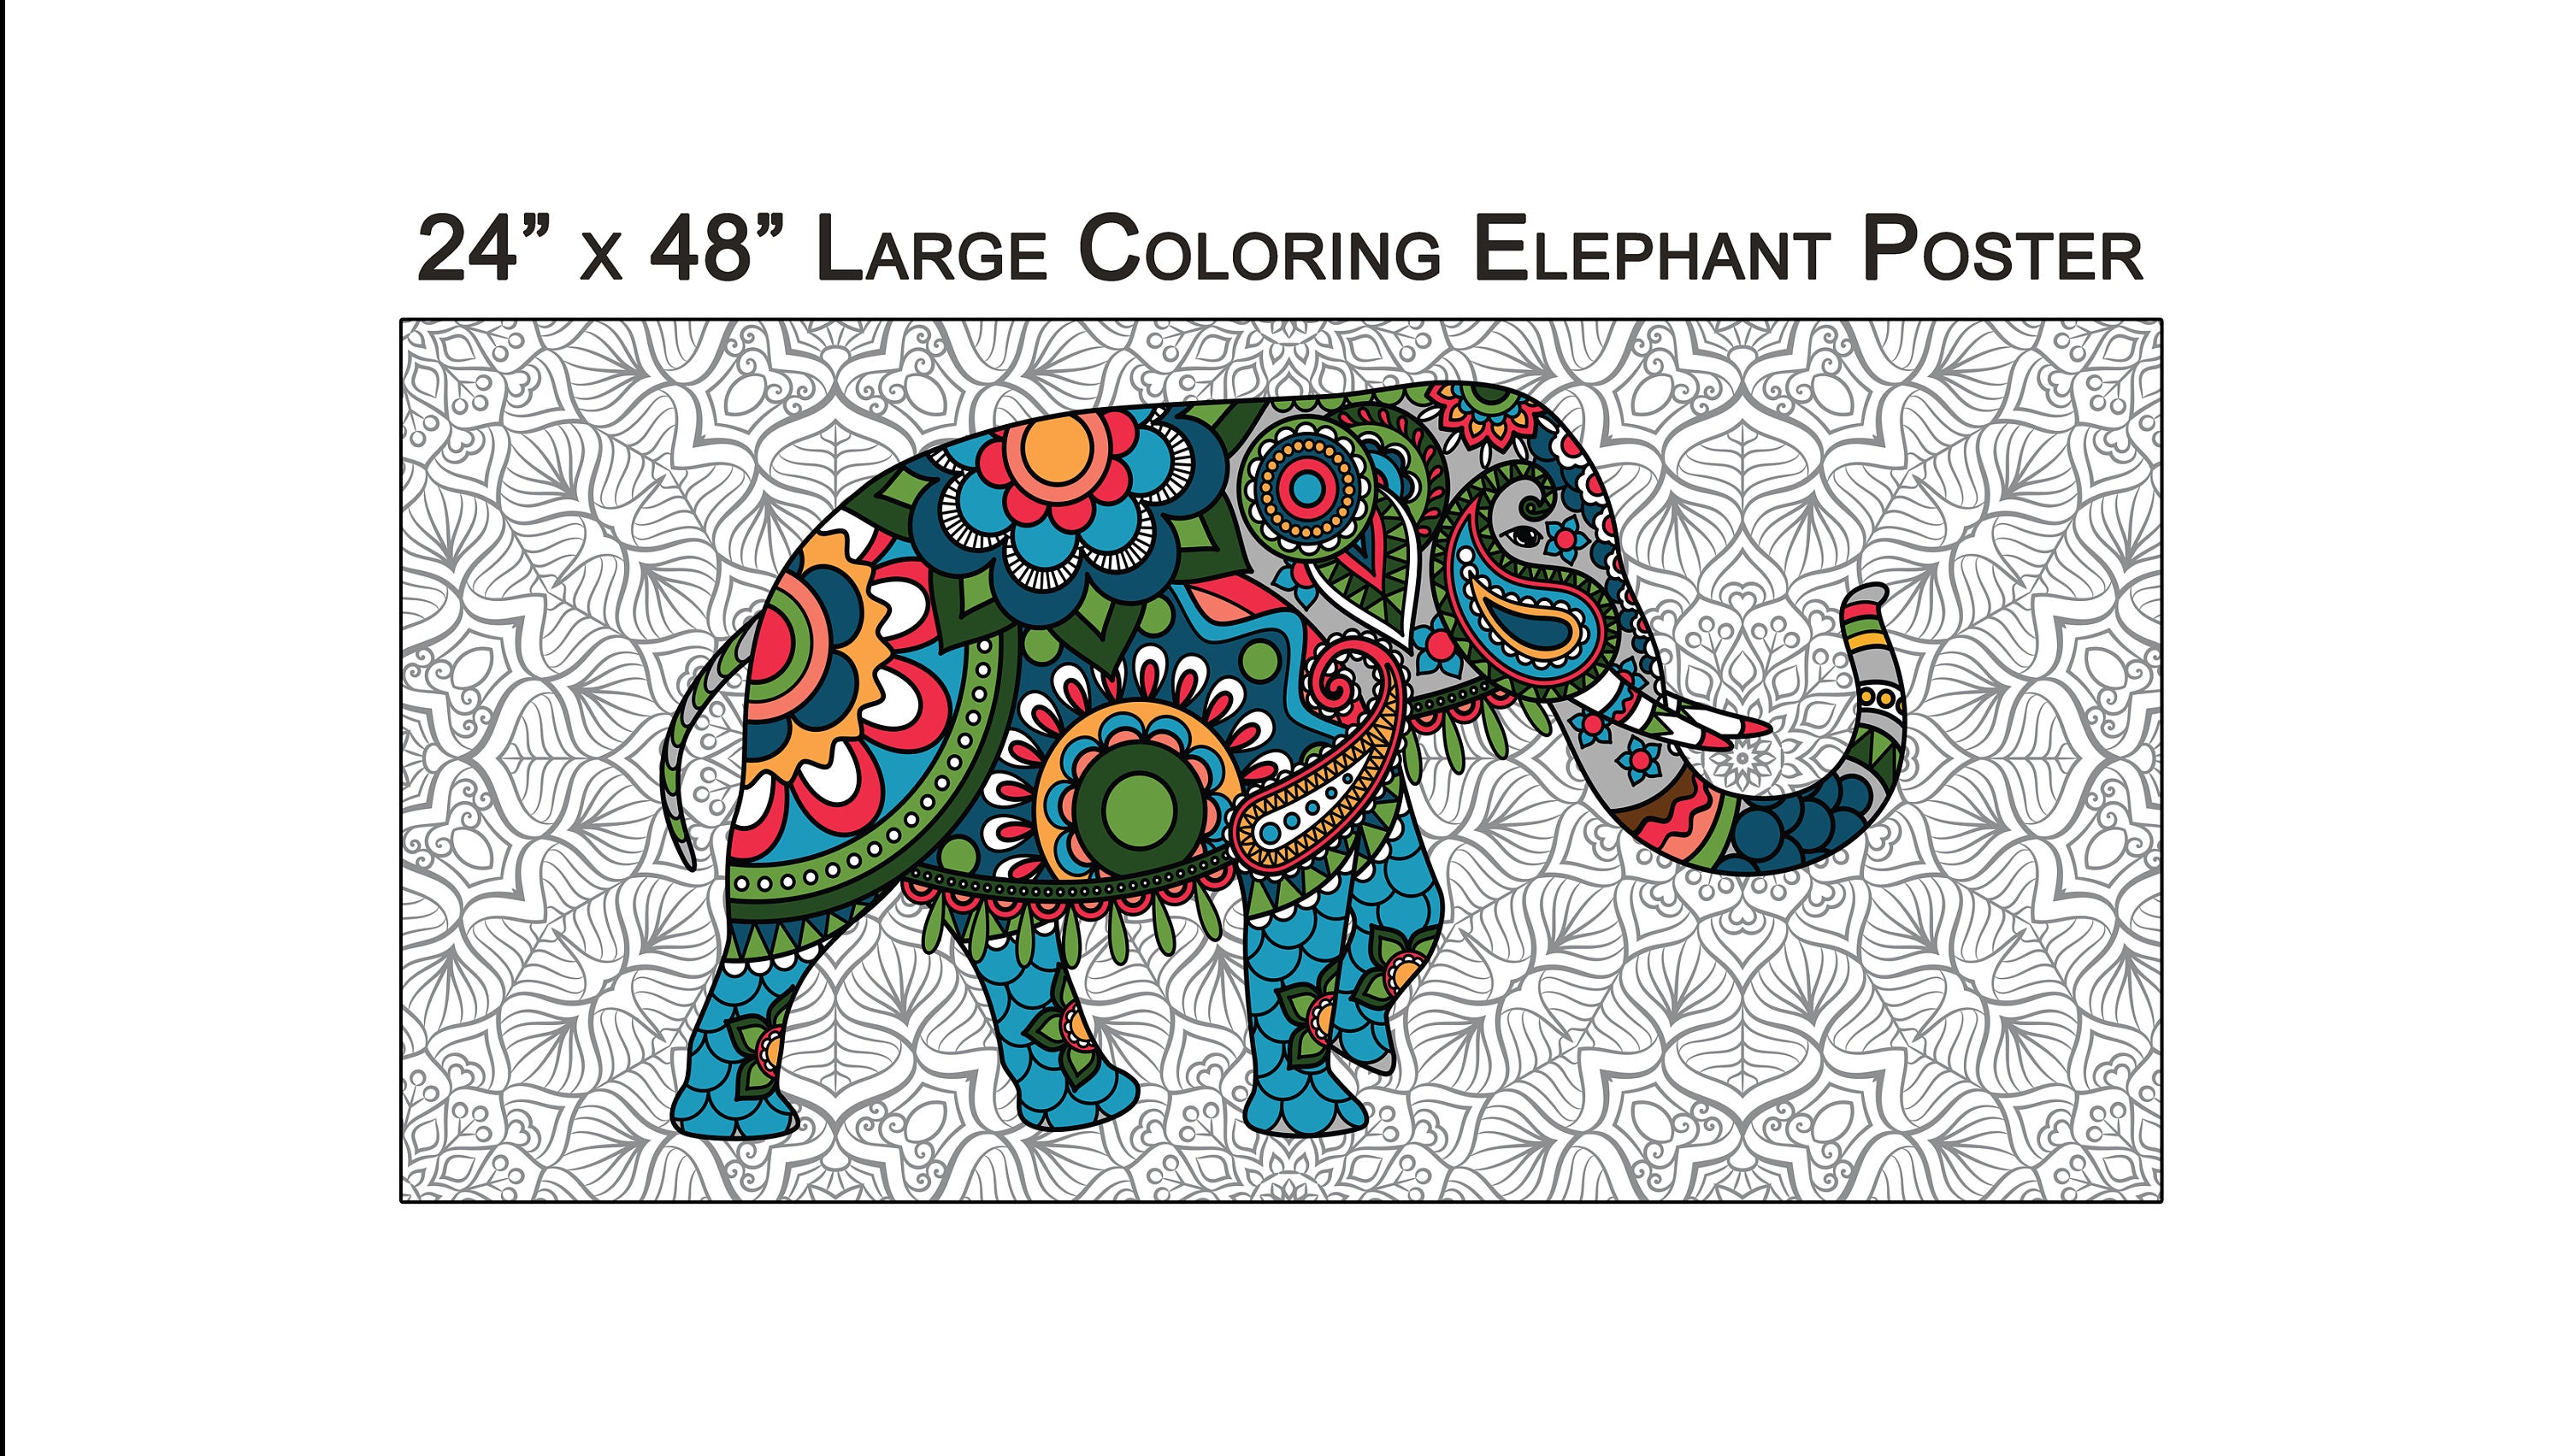  Color Bigger Giant Coloring Poster - Huge Elephant Coloring  Posters for Adults & Kids, Large Poster Wall Art